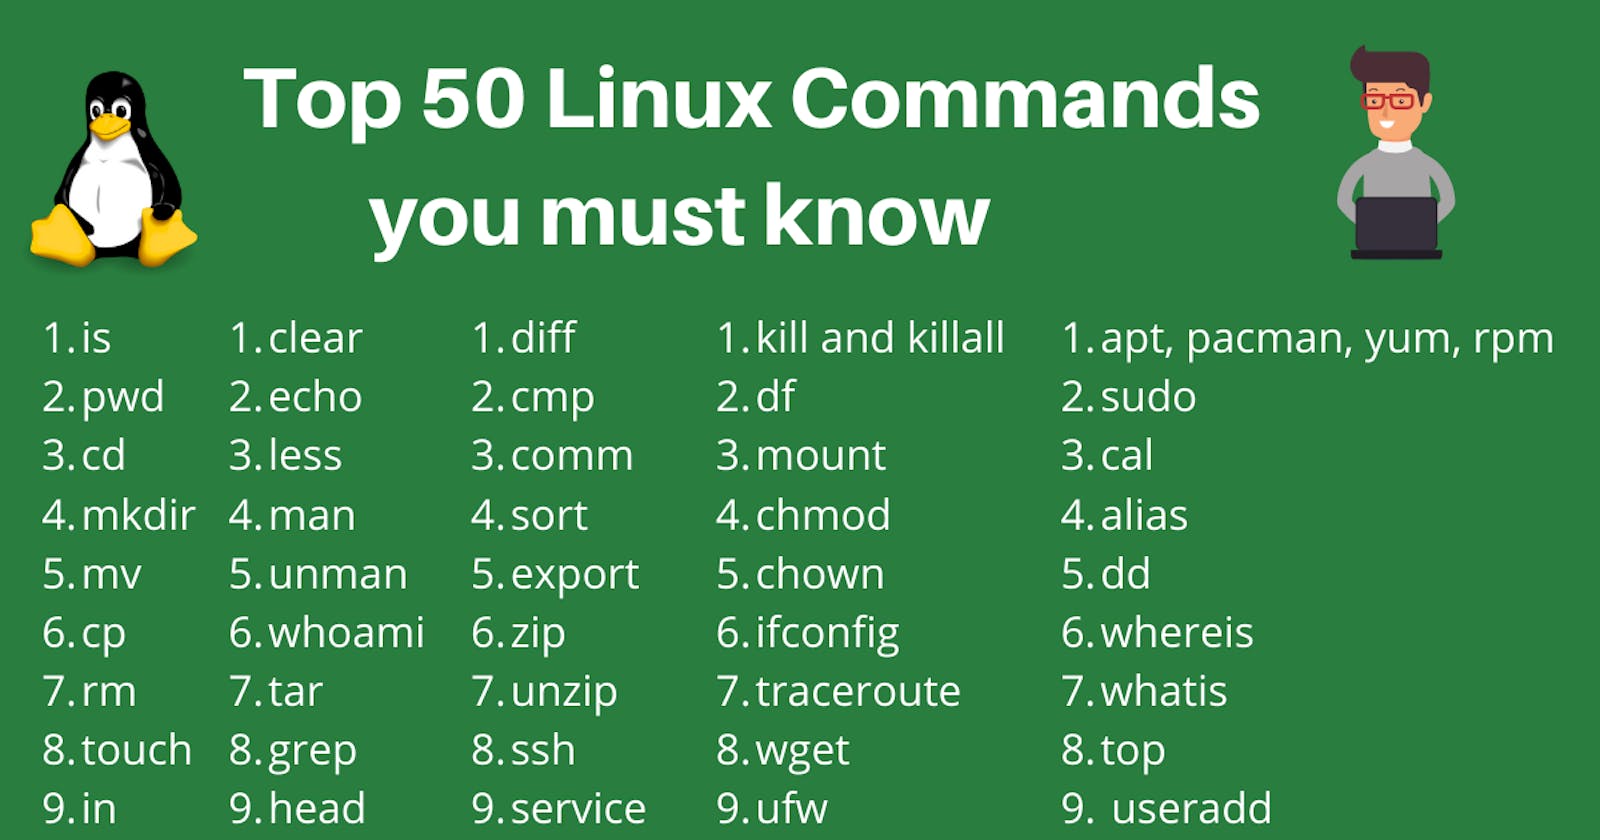 #day3 - Basics Linux commands